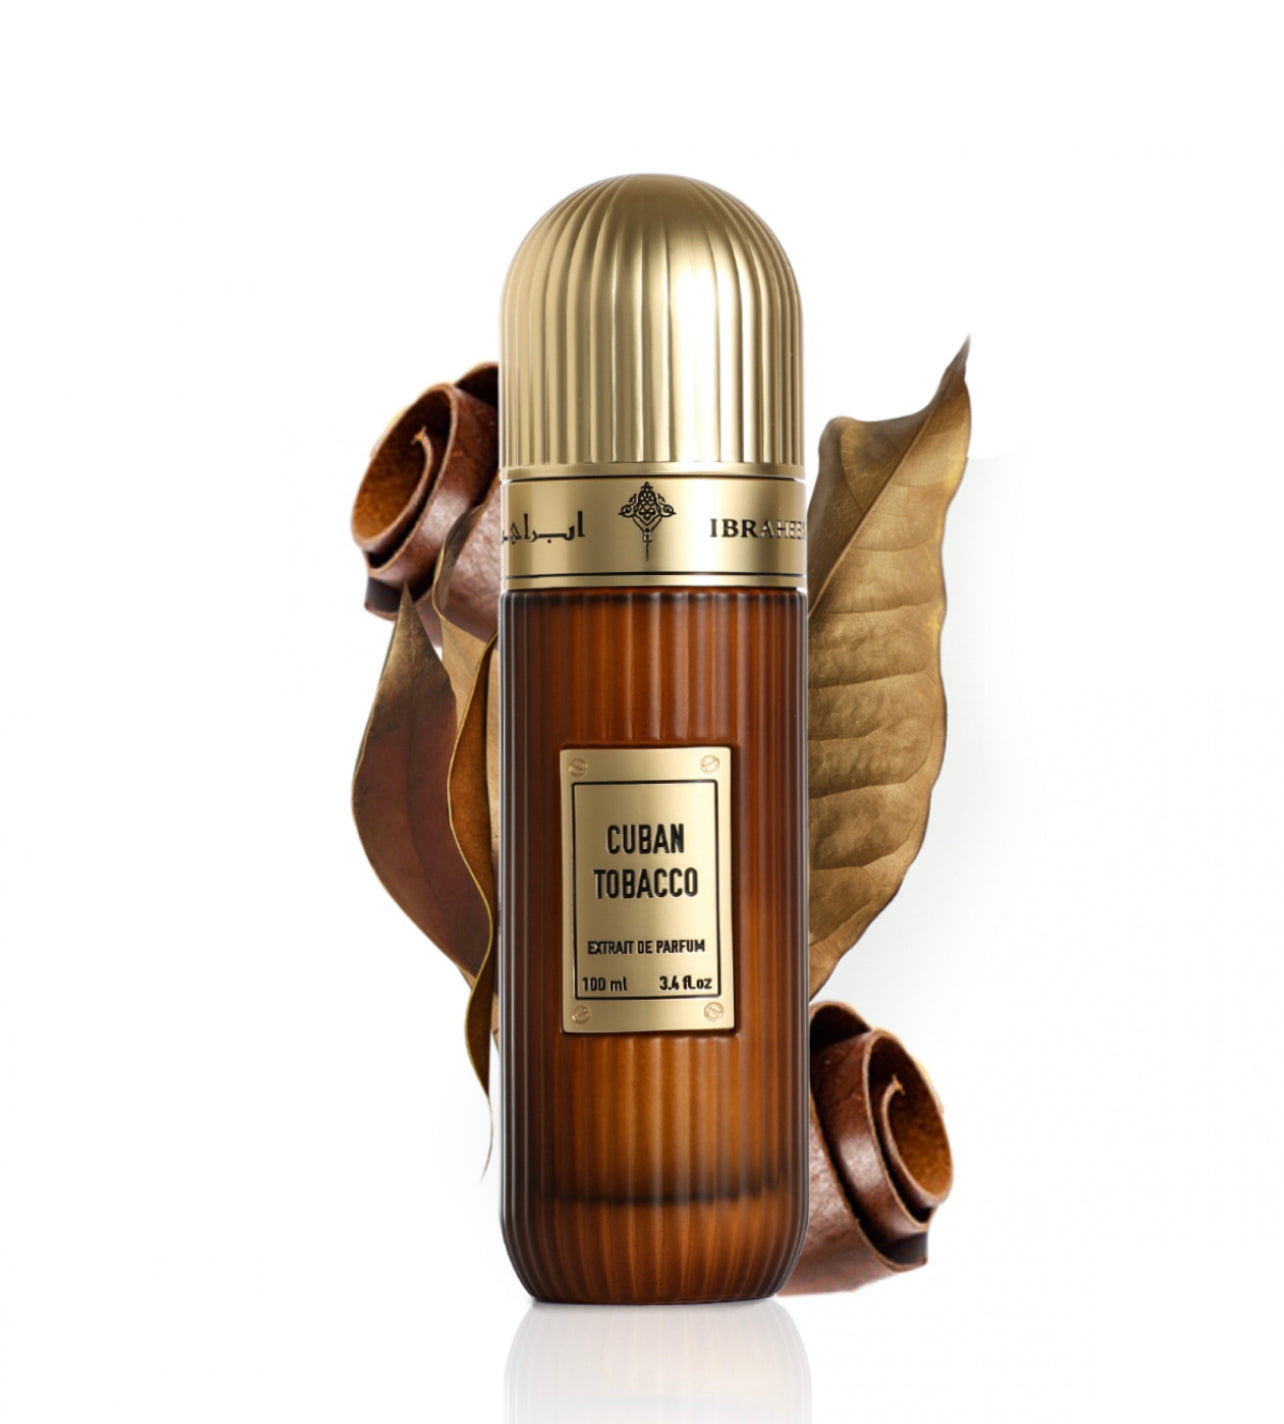 Ibraheem Alqurashi Tobacco Collection - Cuban Tobacco Eau de Parfum - 100ml